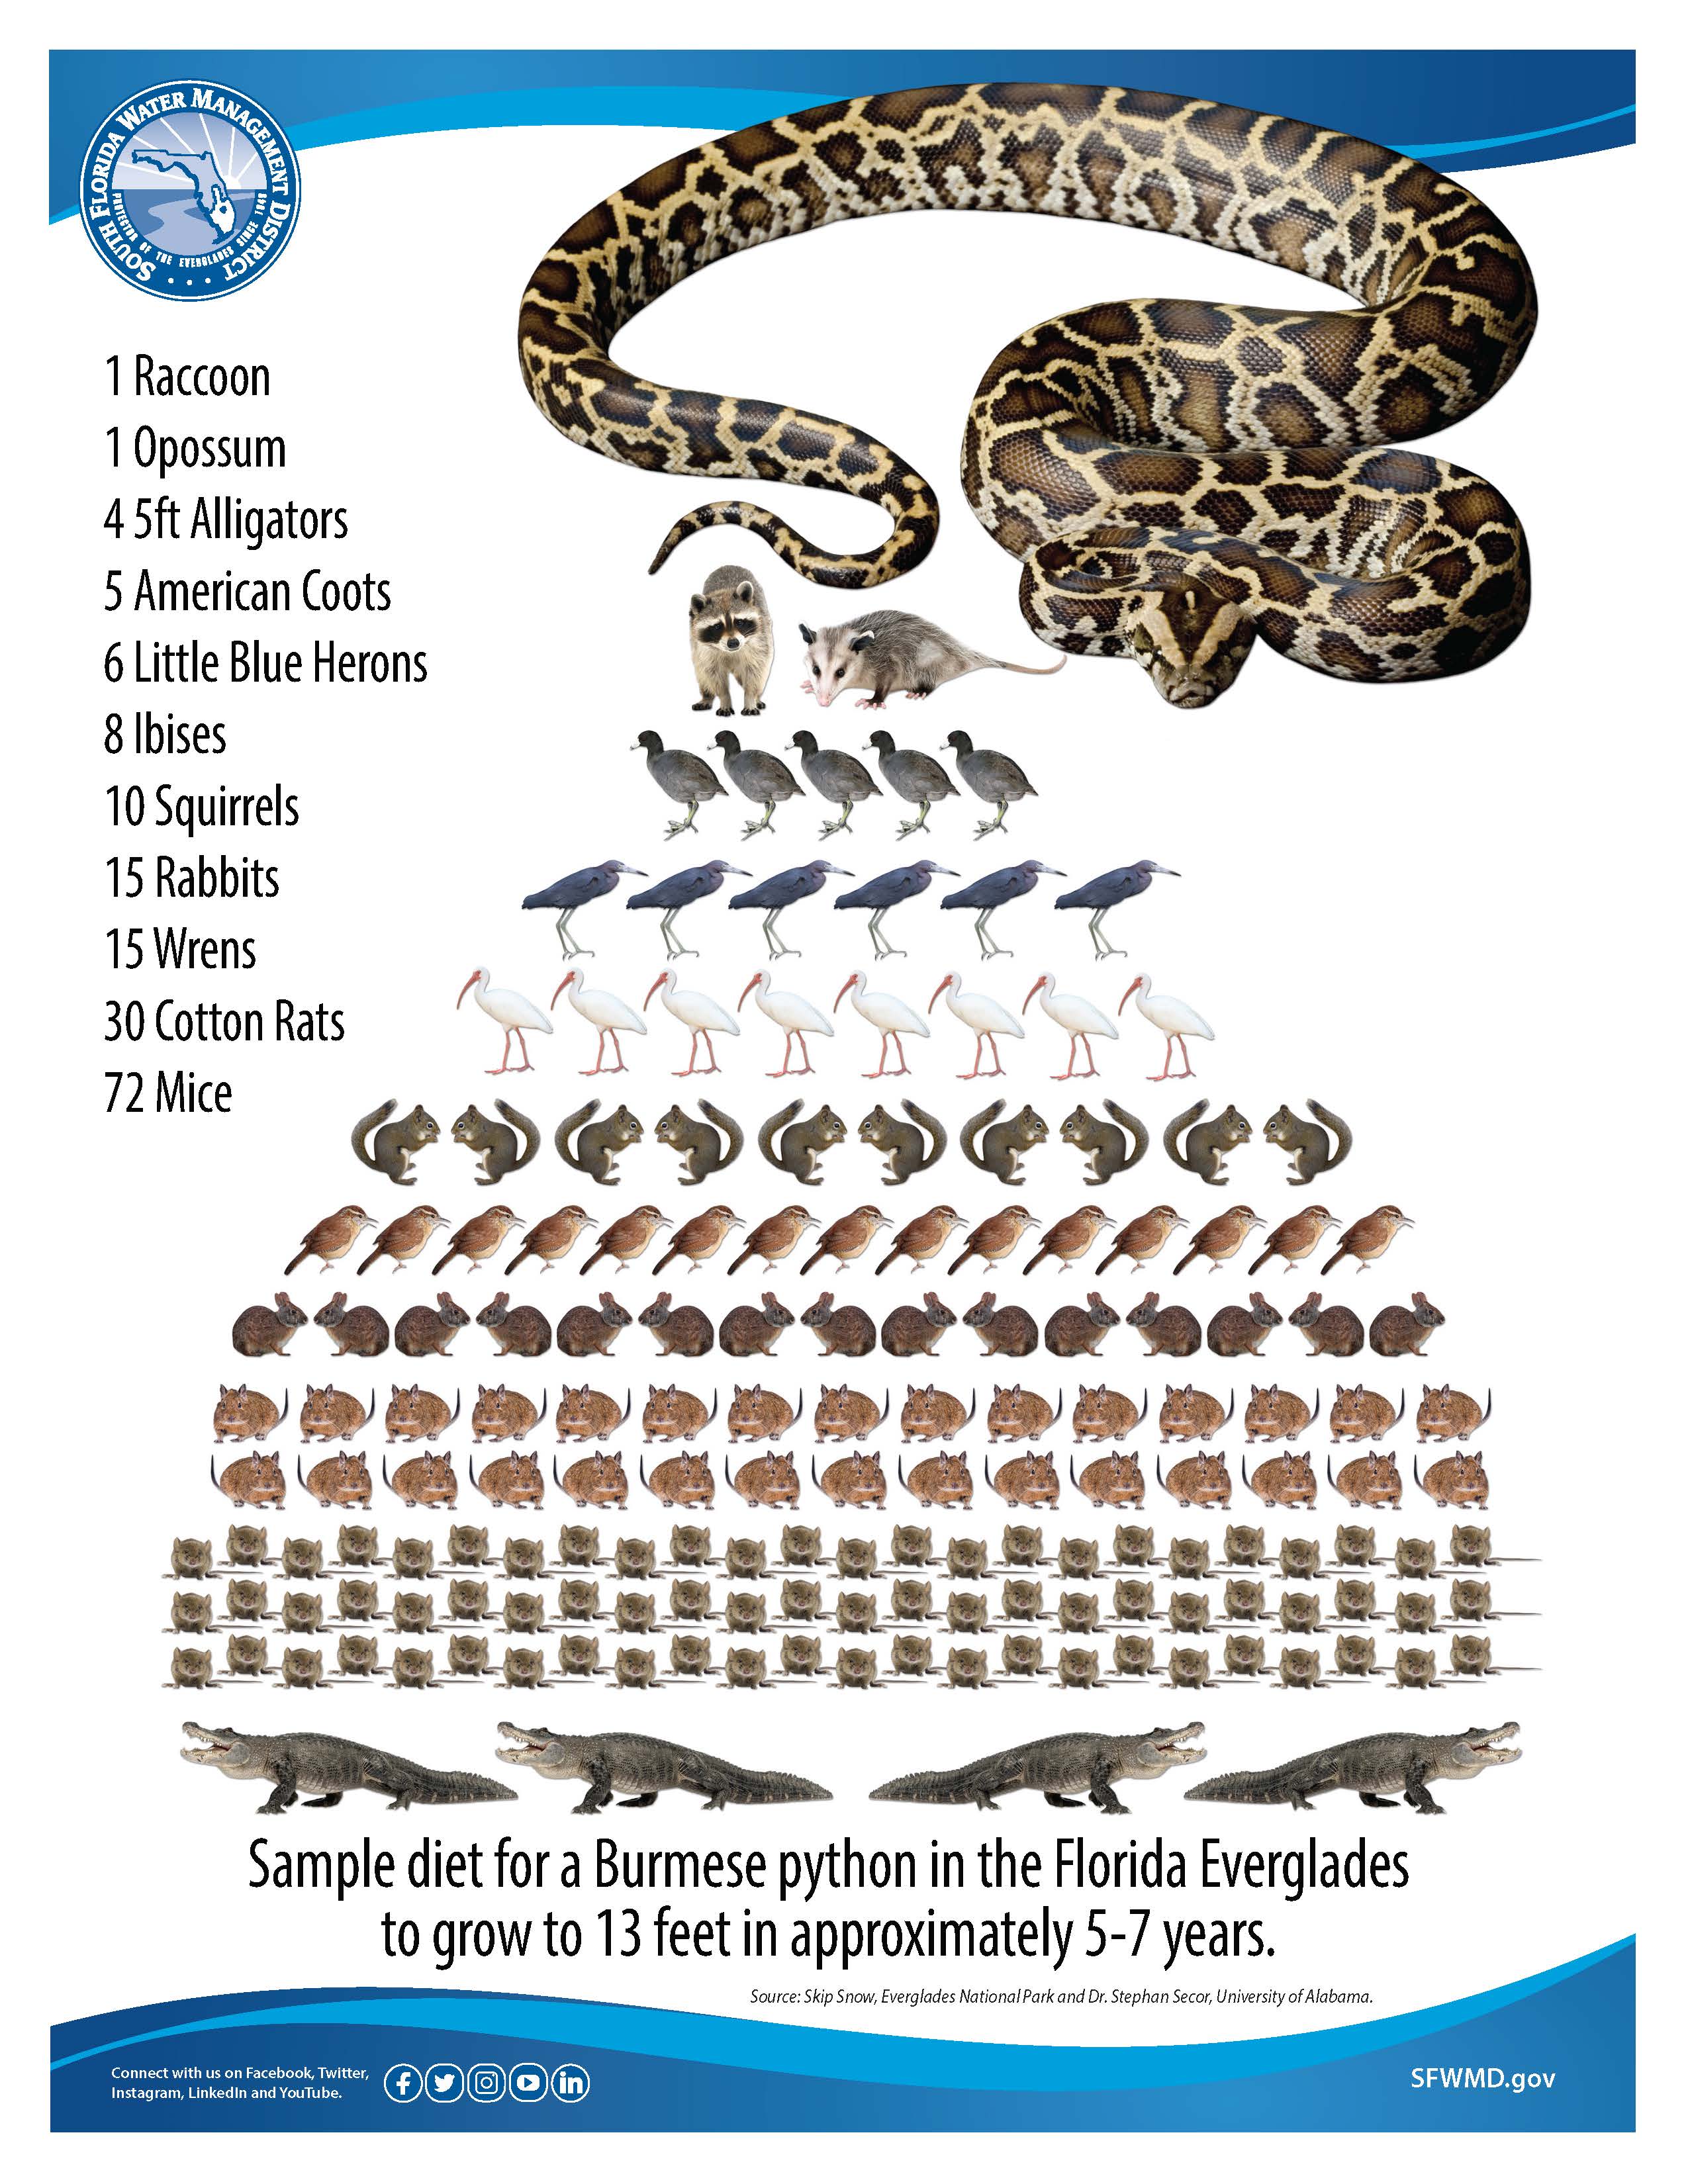 How Do They Kill Burmese Pythons in Florida? 2